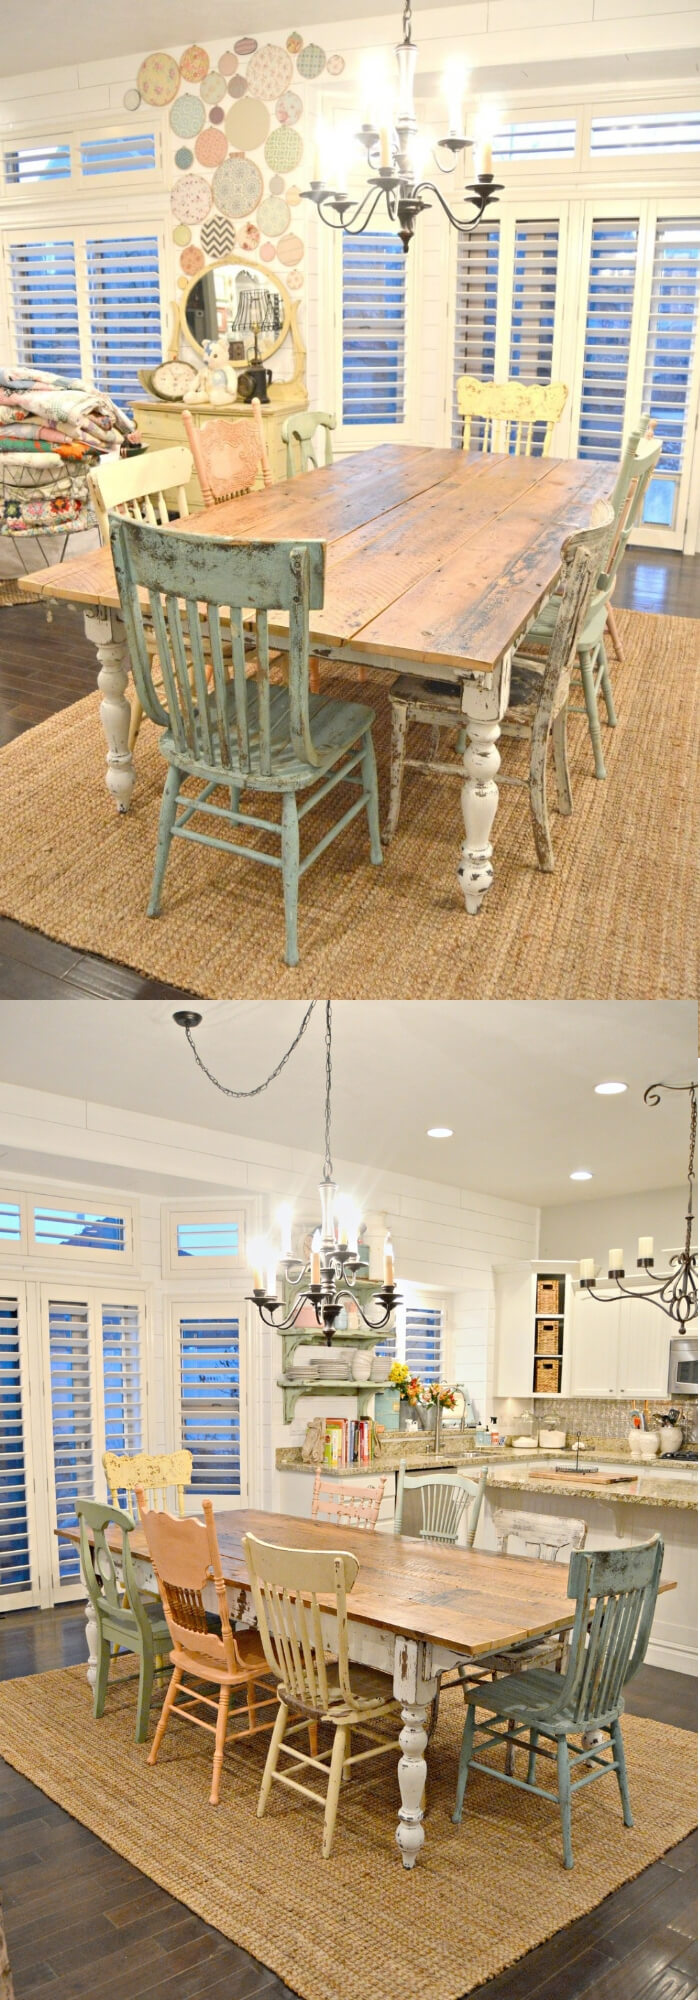 Farm style table w/mismatched chairs | Stunning Farmhouse Dining Room Design & Decor Ideas